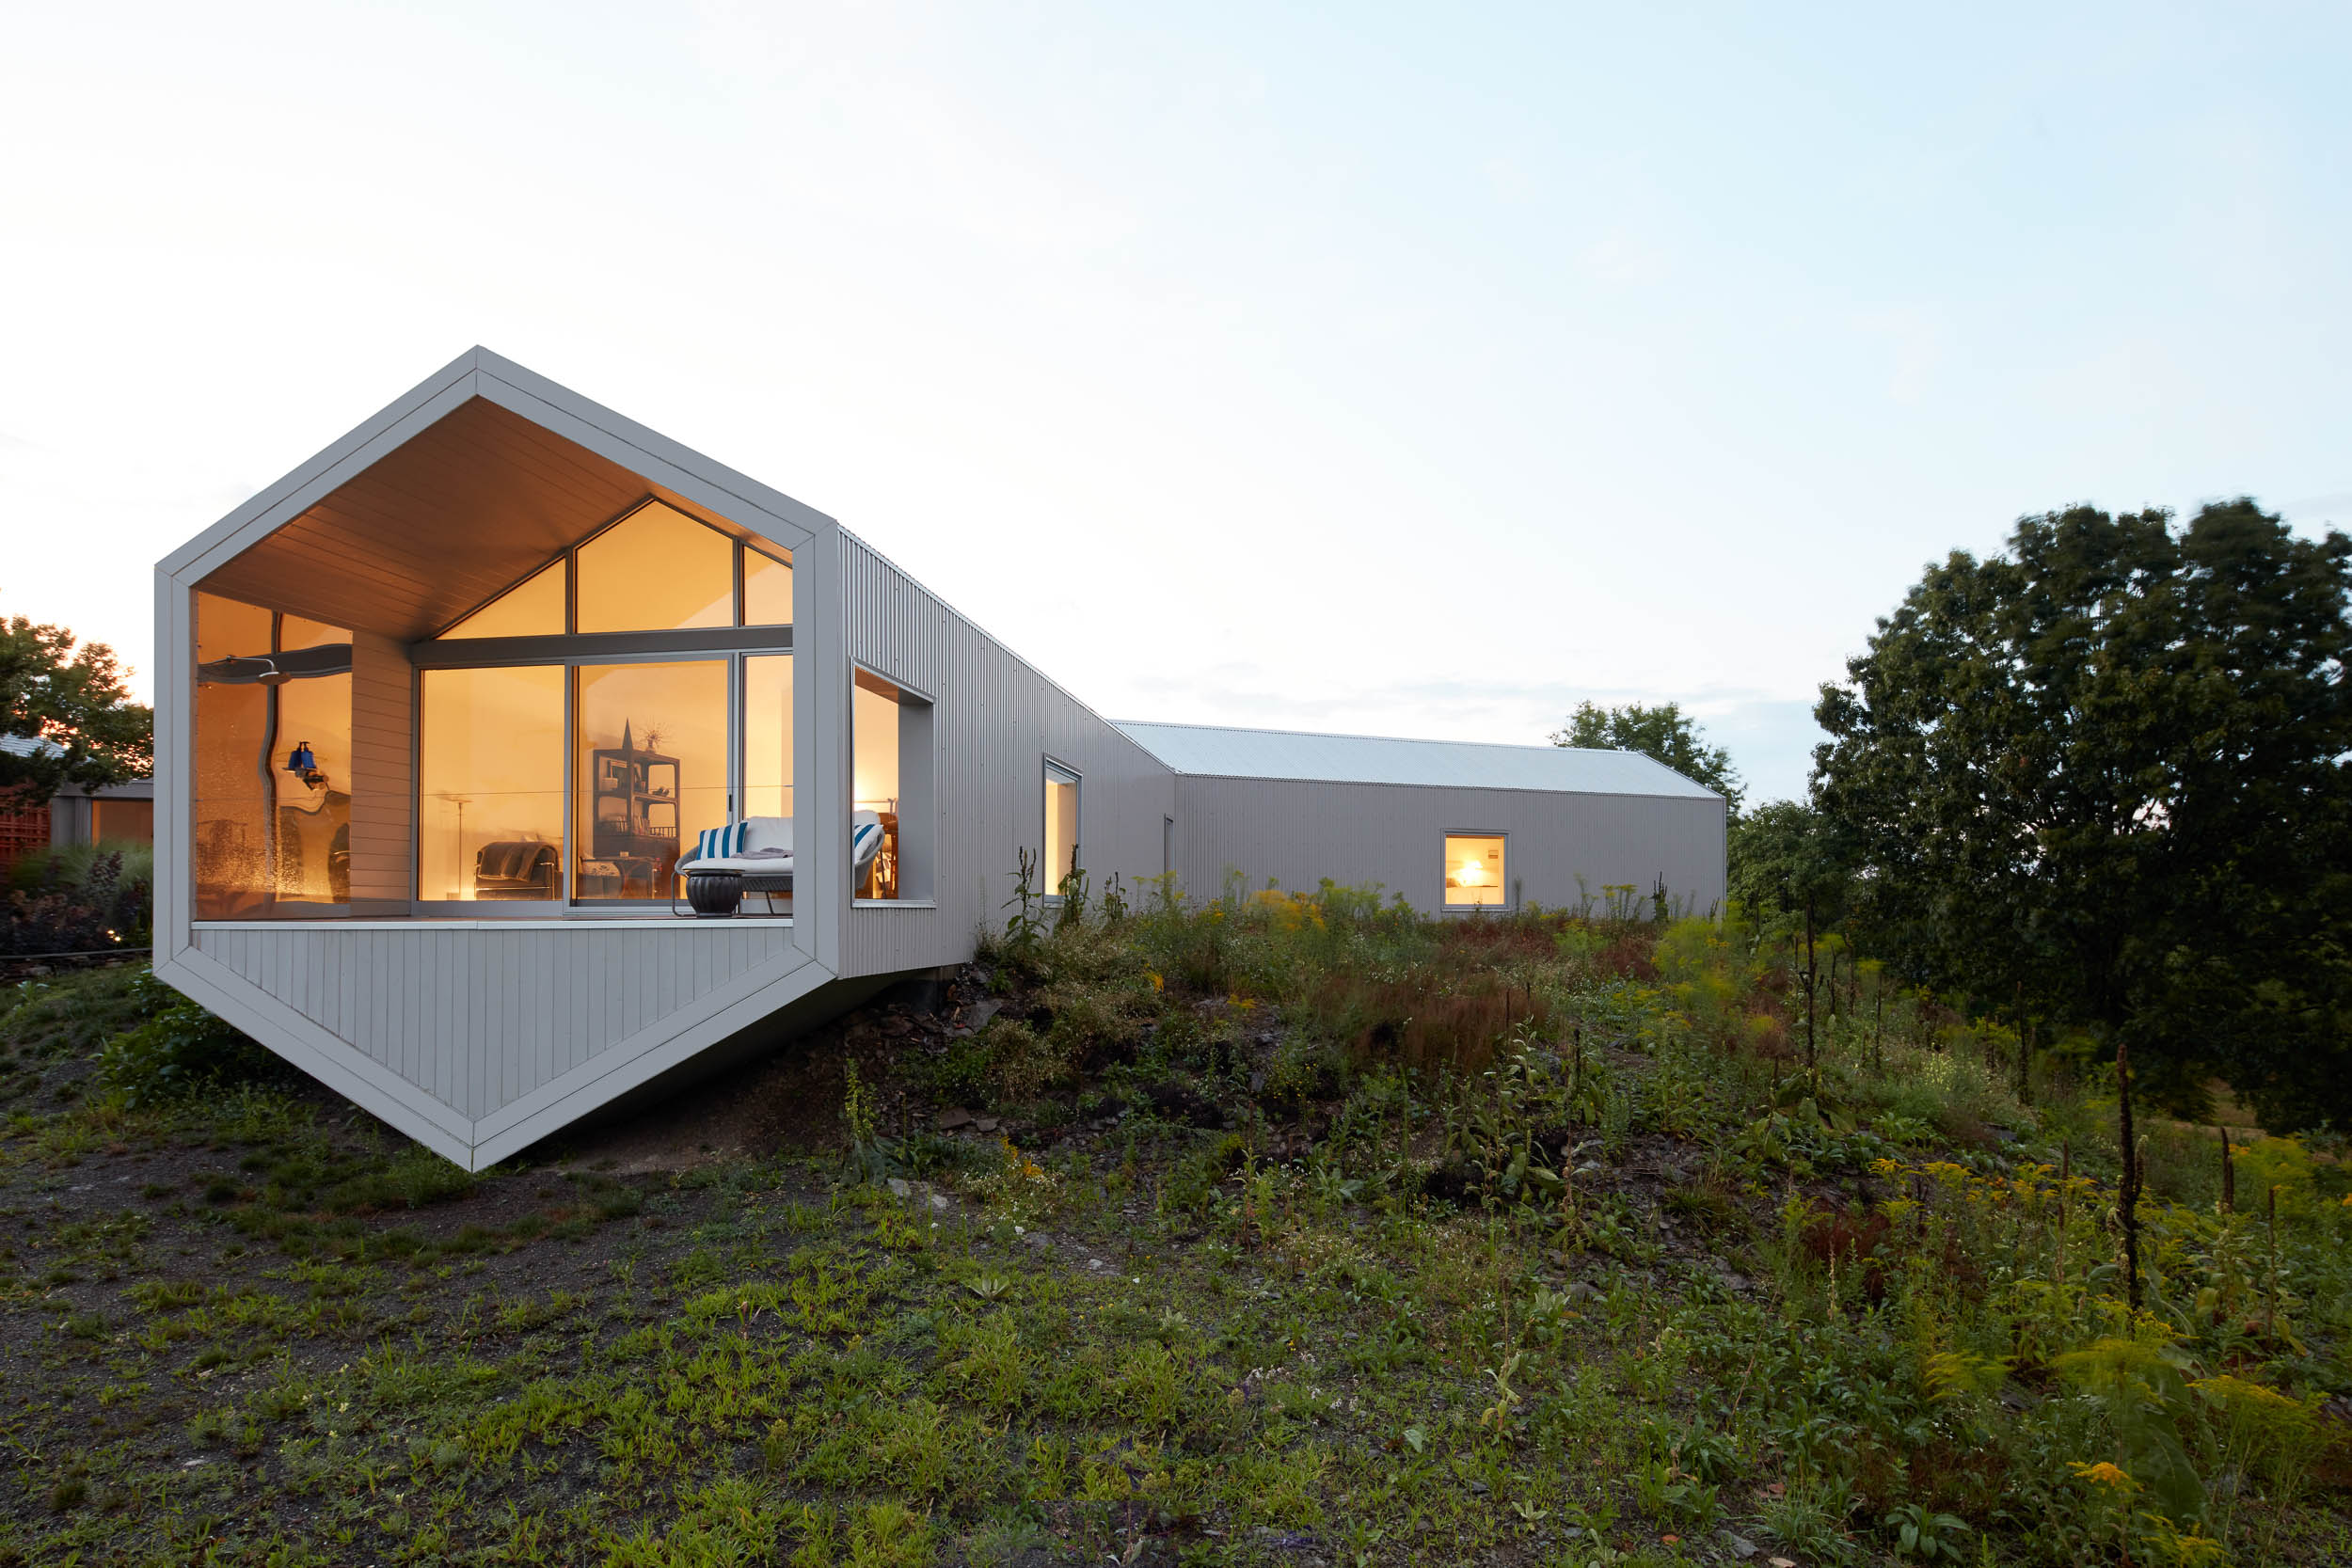 Warmly lit hexagonal modern home designed by artist Ai Weiwei set in a lush green rural area